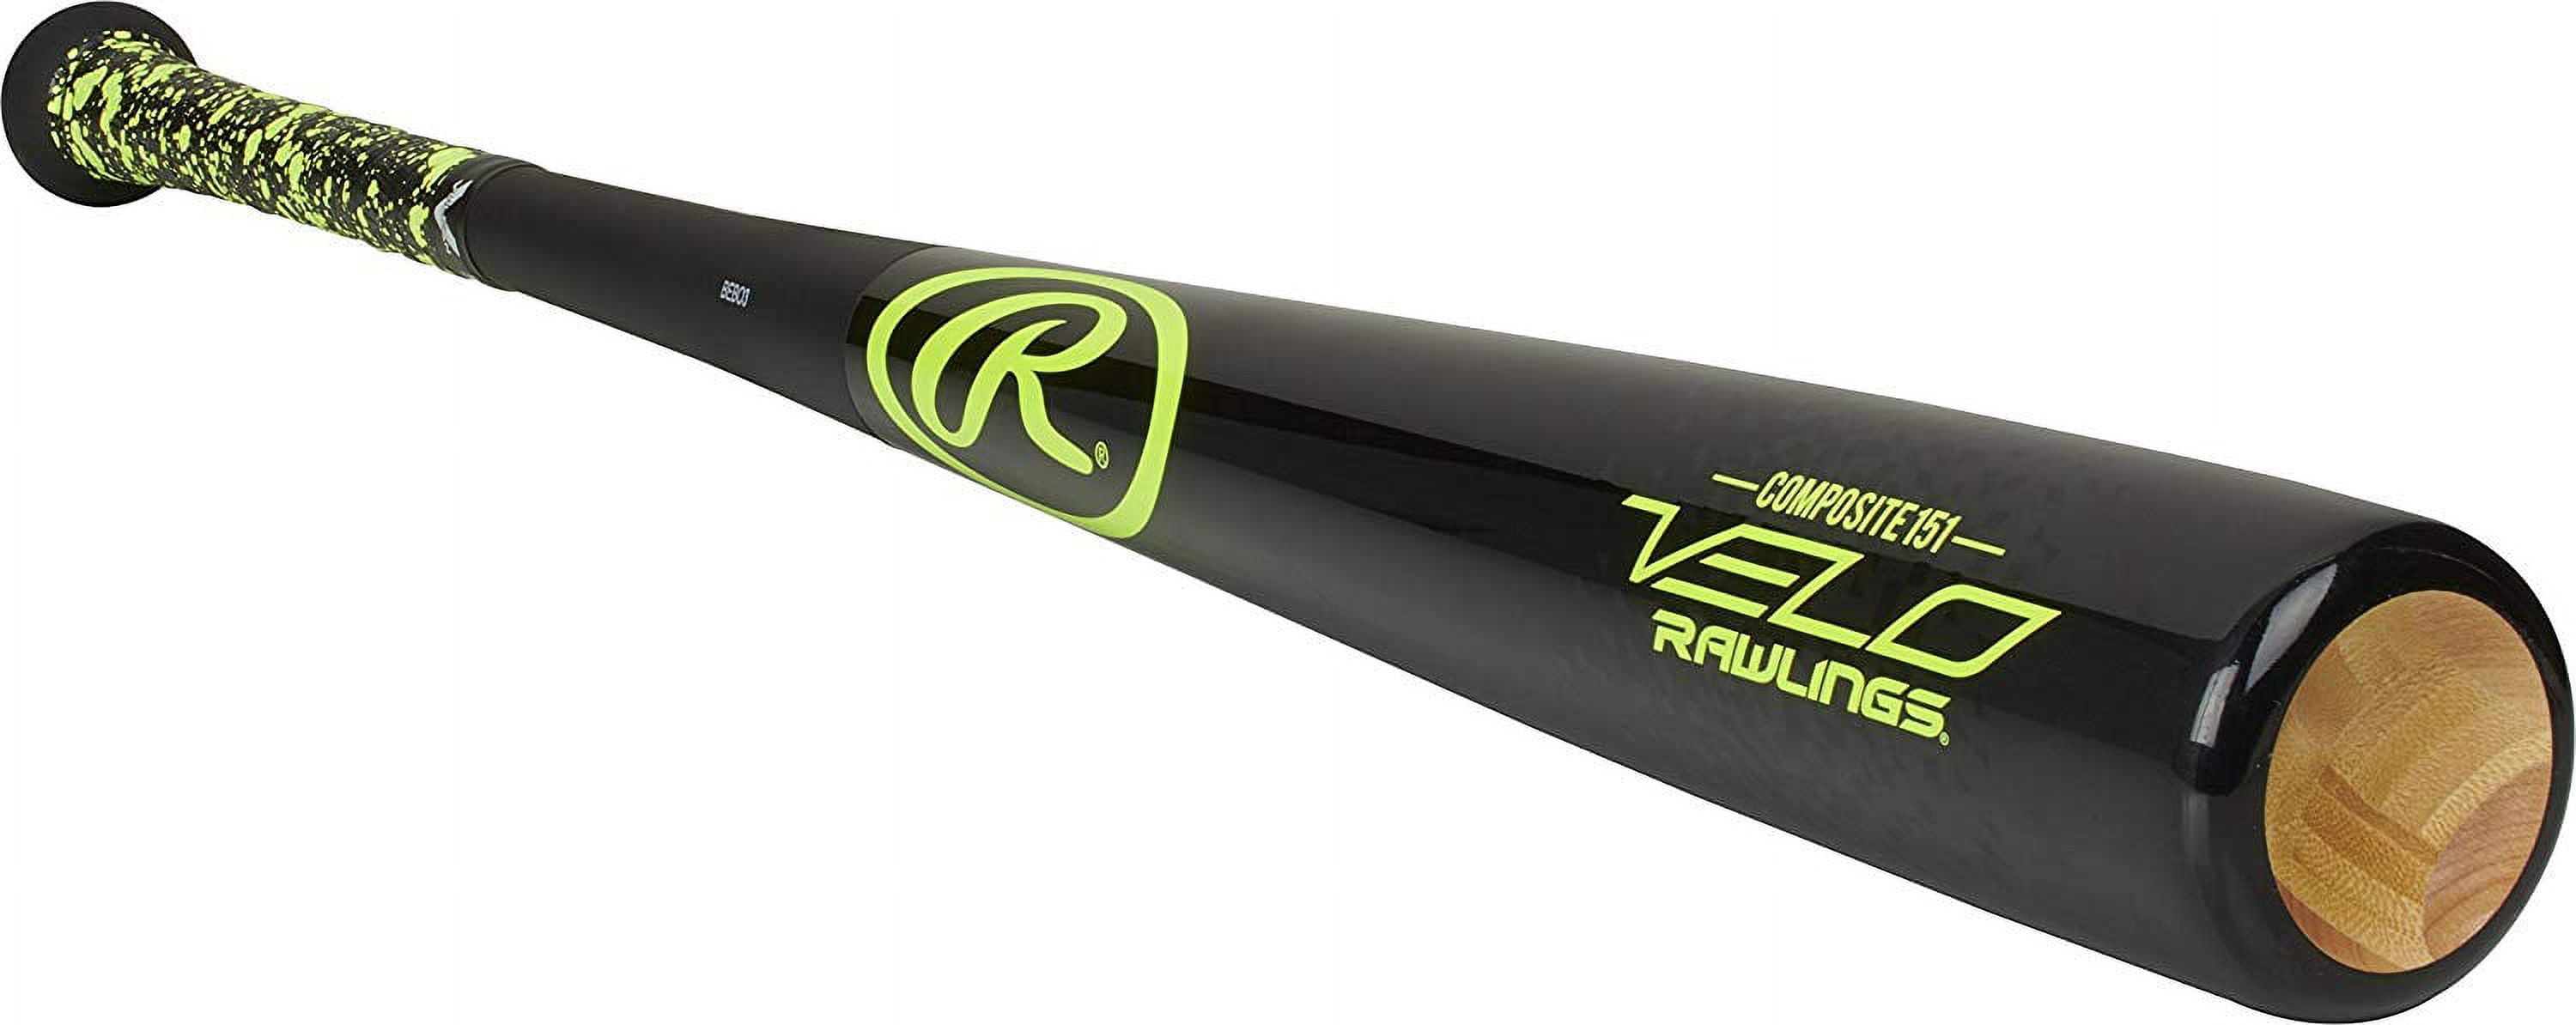 Rawlings Velo -8 USSSA Baseball Bat, 31 in